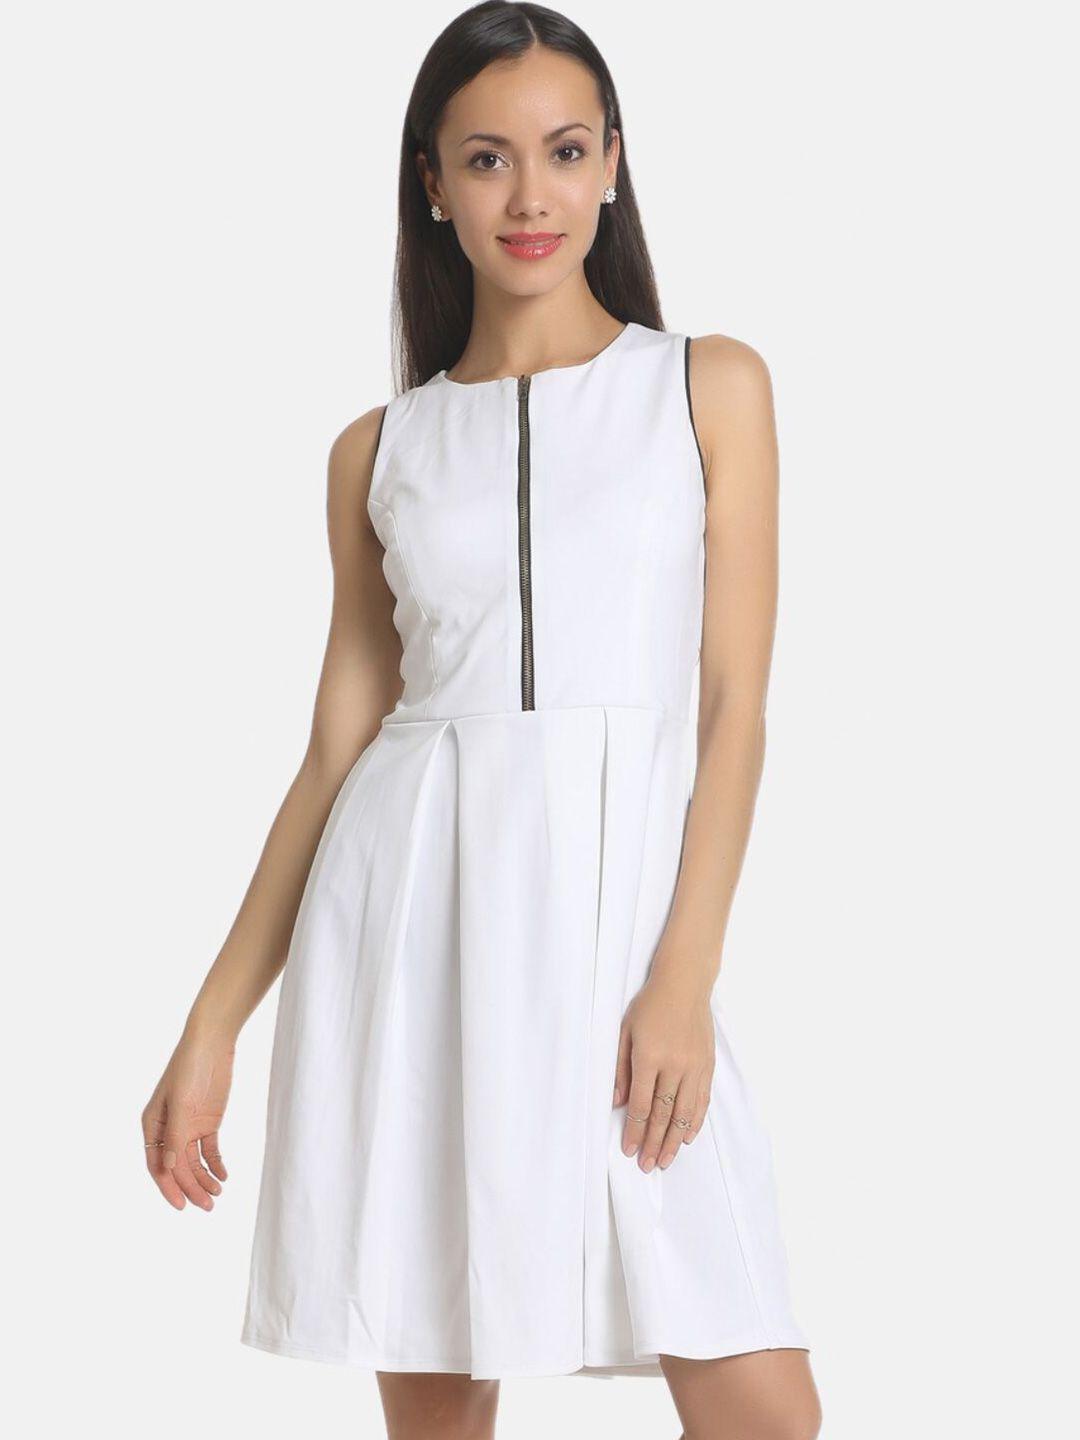 aara woman white dress